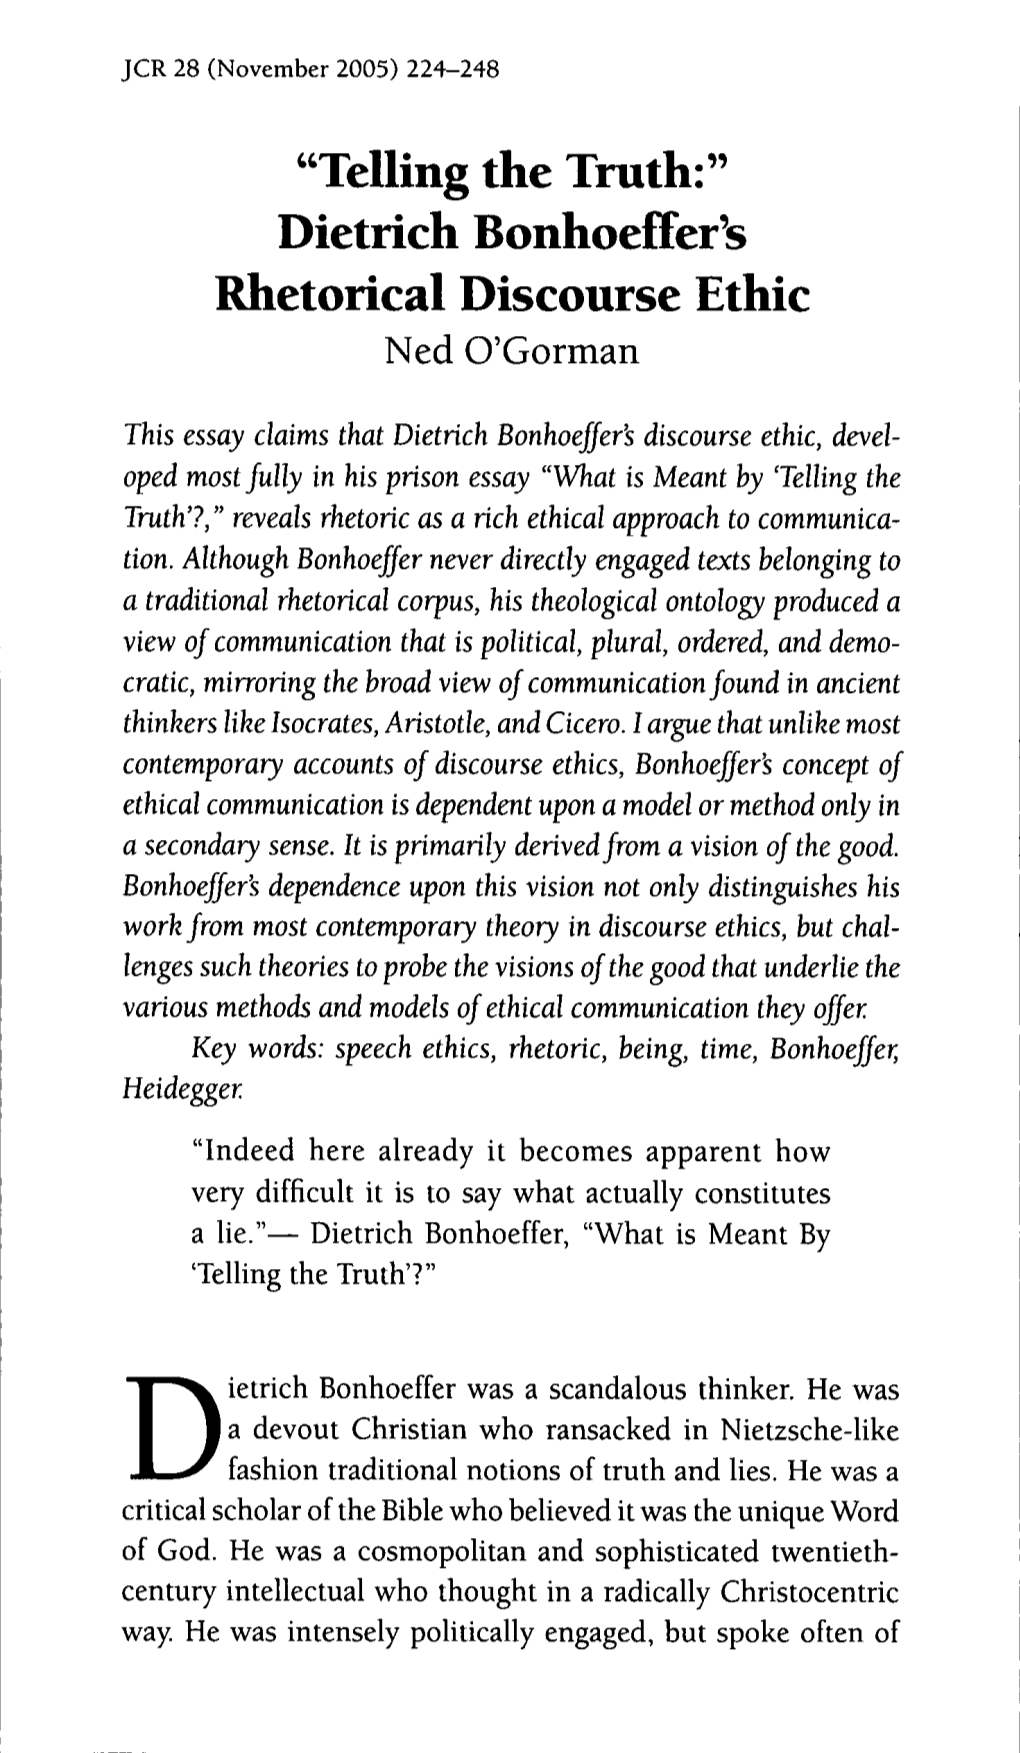 "Telling the Truth:" Dietrich Bonhoeffer's Rhetorical Discourse Ethic Ned O'gorman